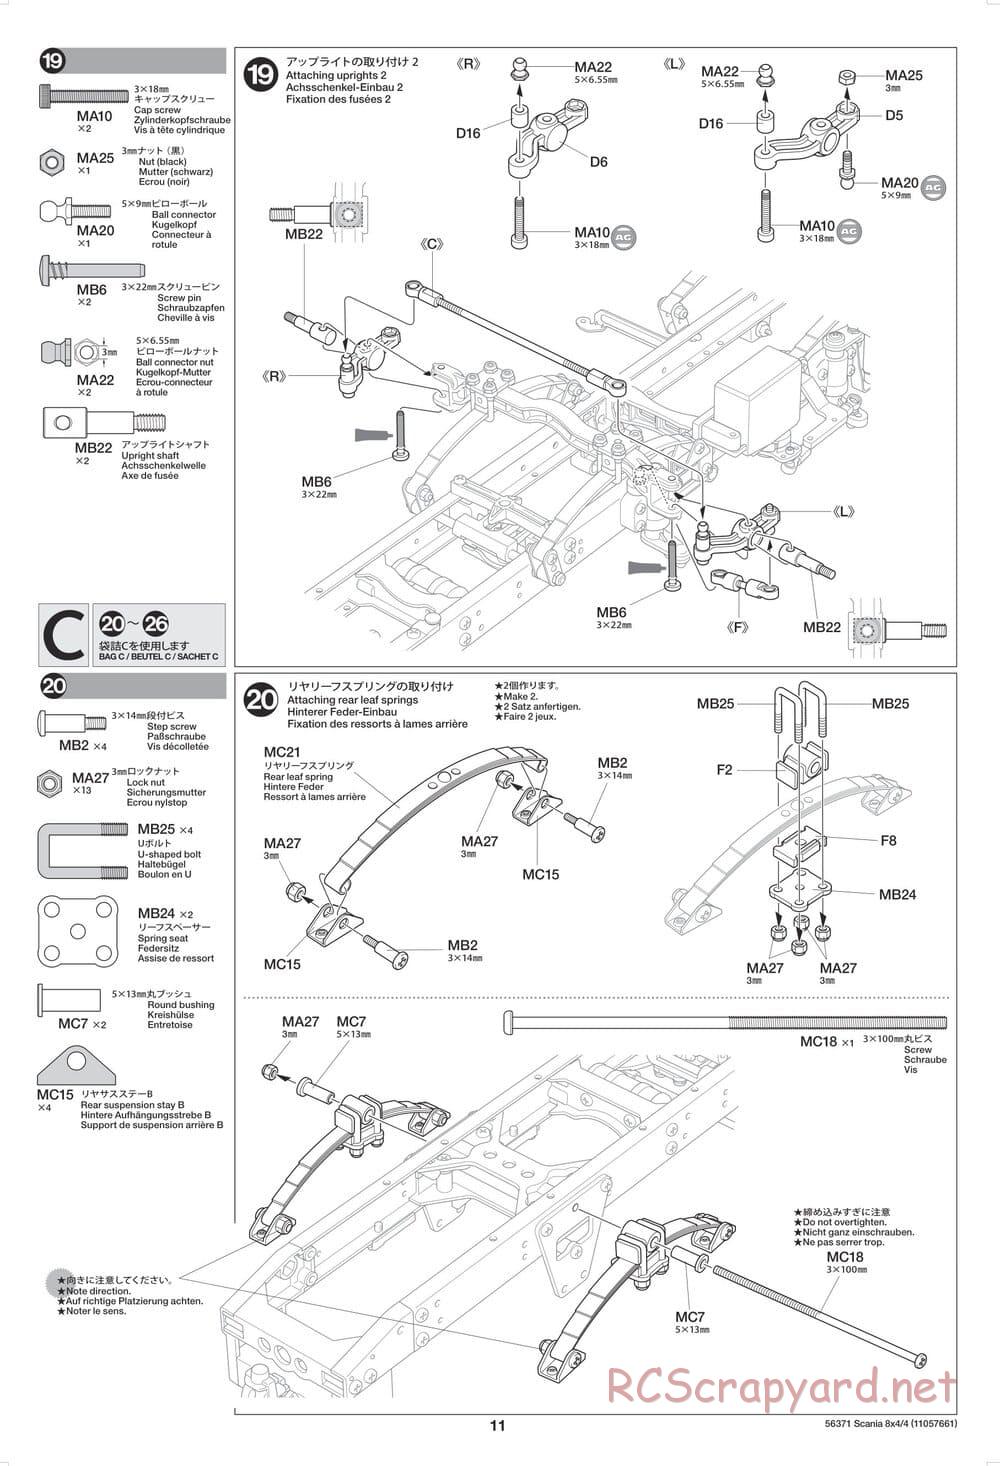 Tamiya - Scania 770 S 8x4/4 Chassis - Manual - Page 11